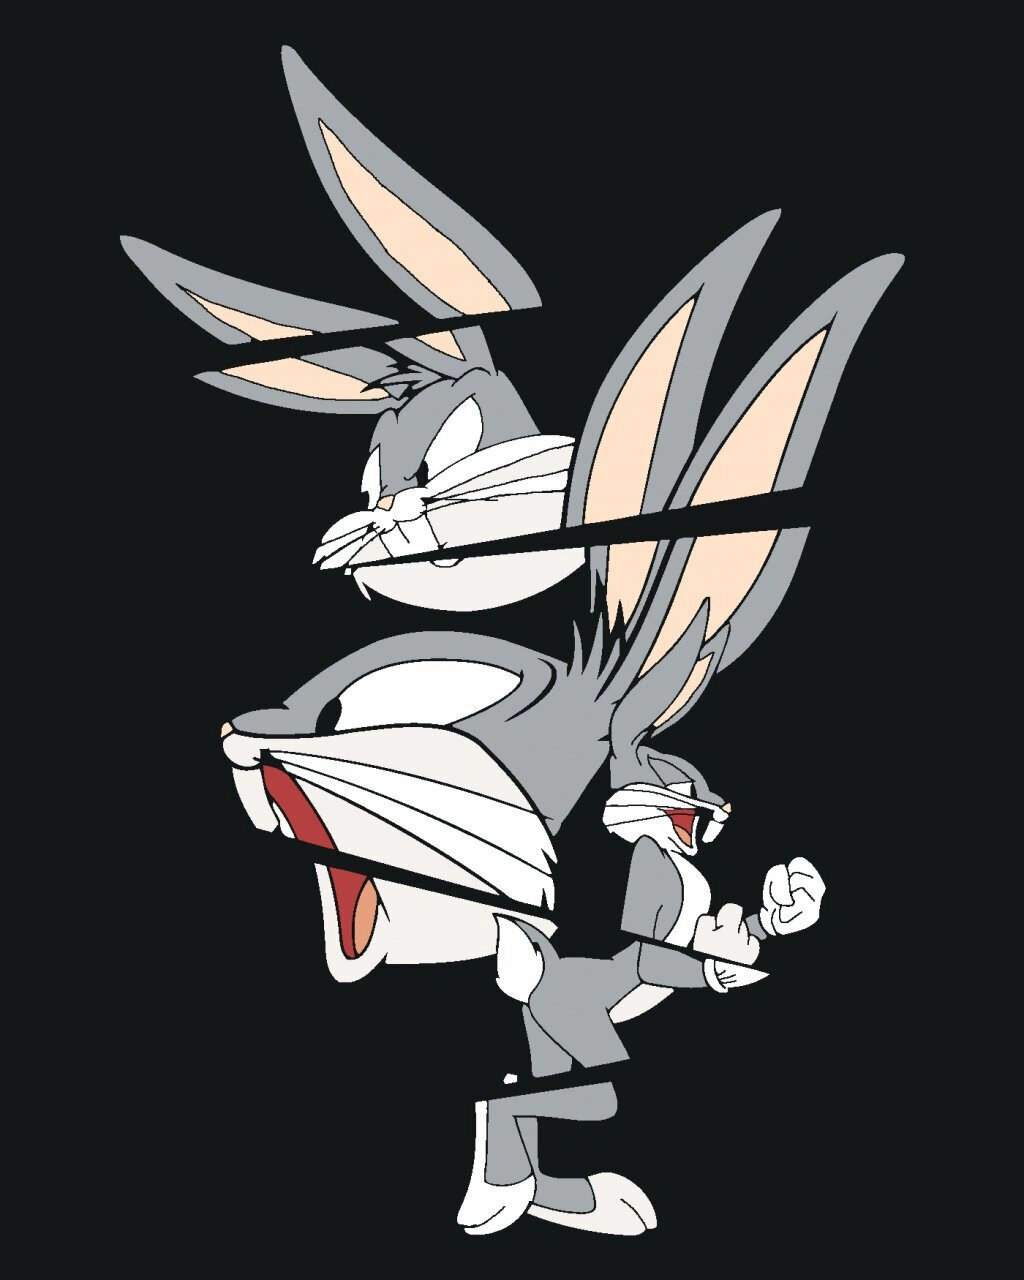 Maling efter tal Zuty Maling efter tal Abstrakt Bugs Bunny (Looney Tunes)